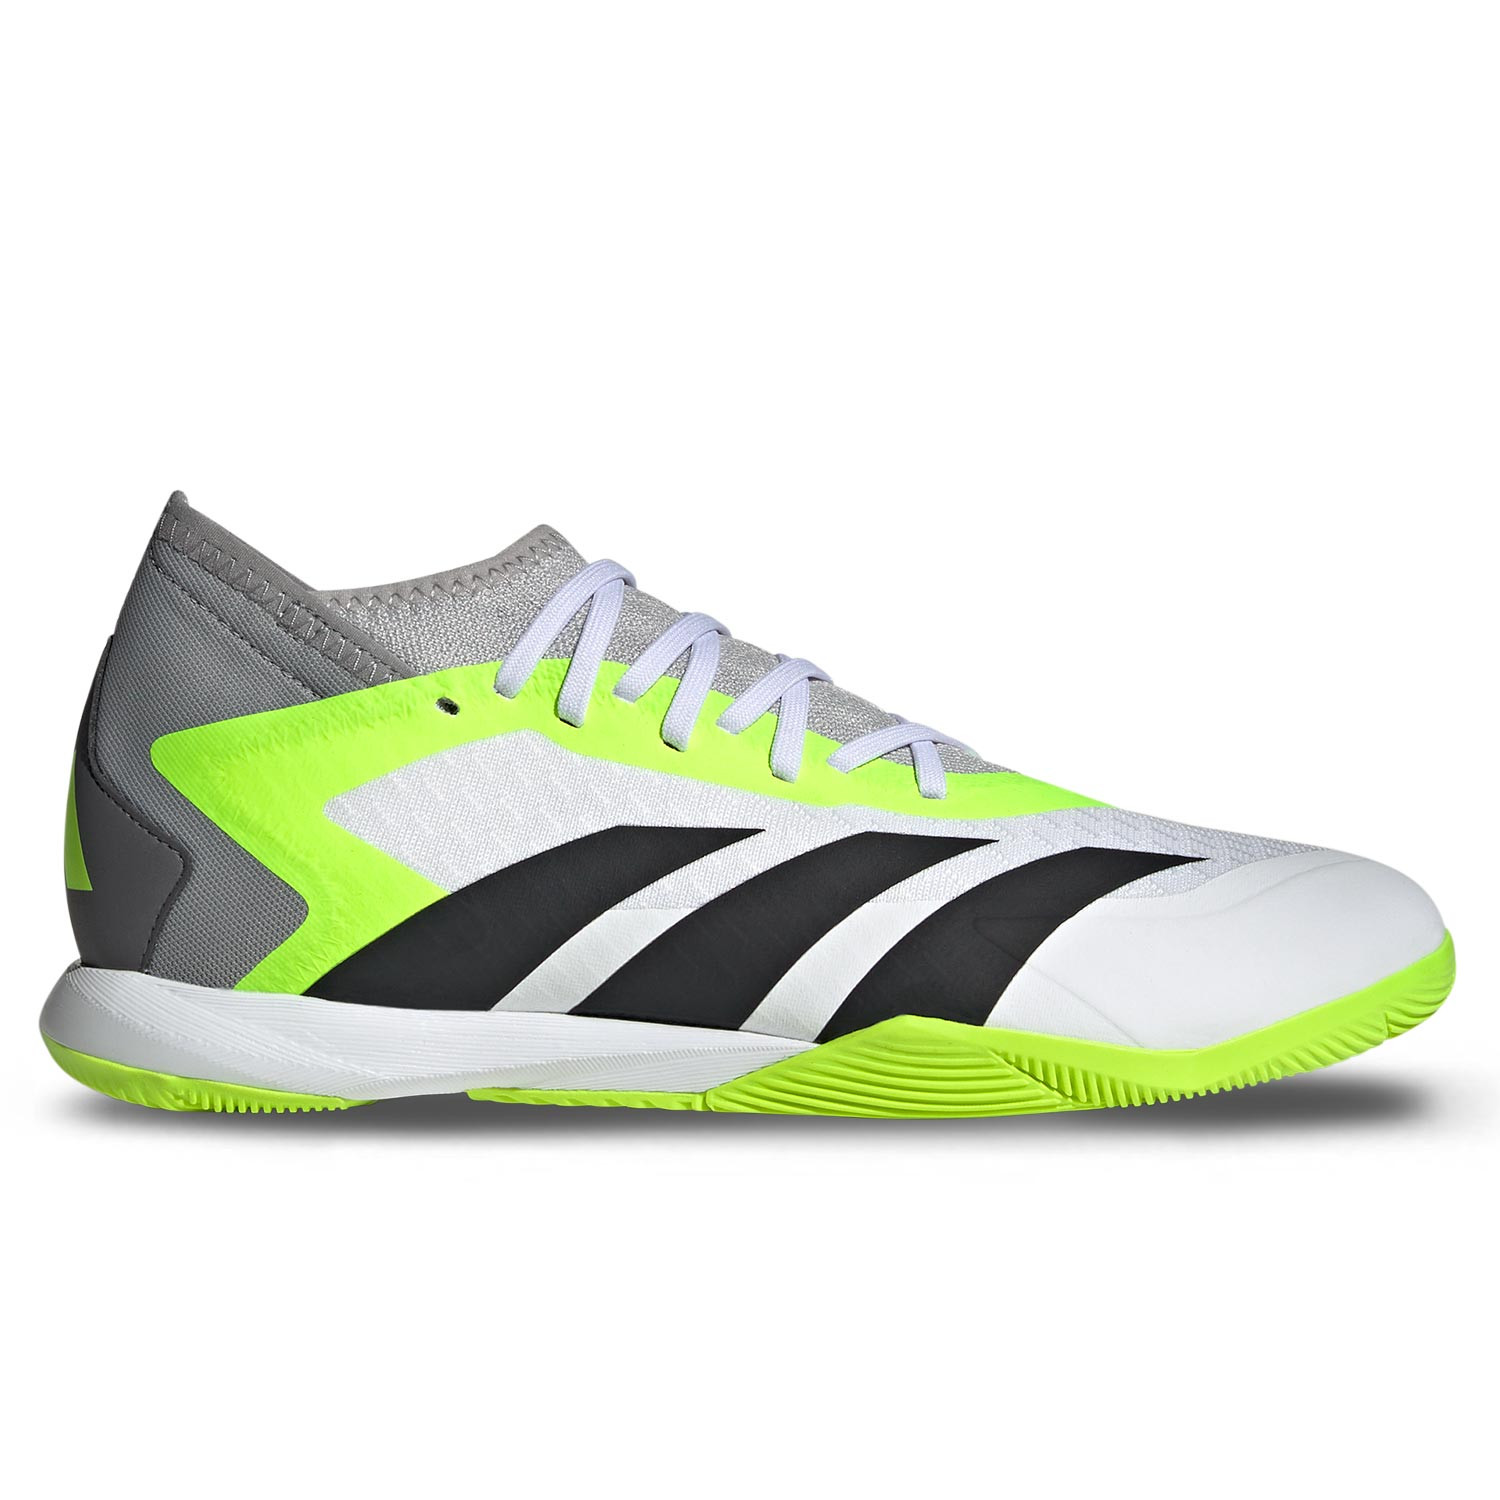 Nike Phantom fútbol sala  Zapatos de fútbol nike, Zapatos de futbol  adidas, Zapatos de futbol sala